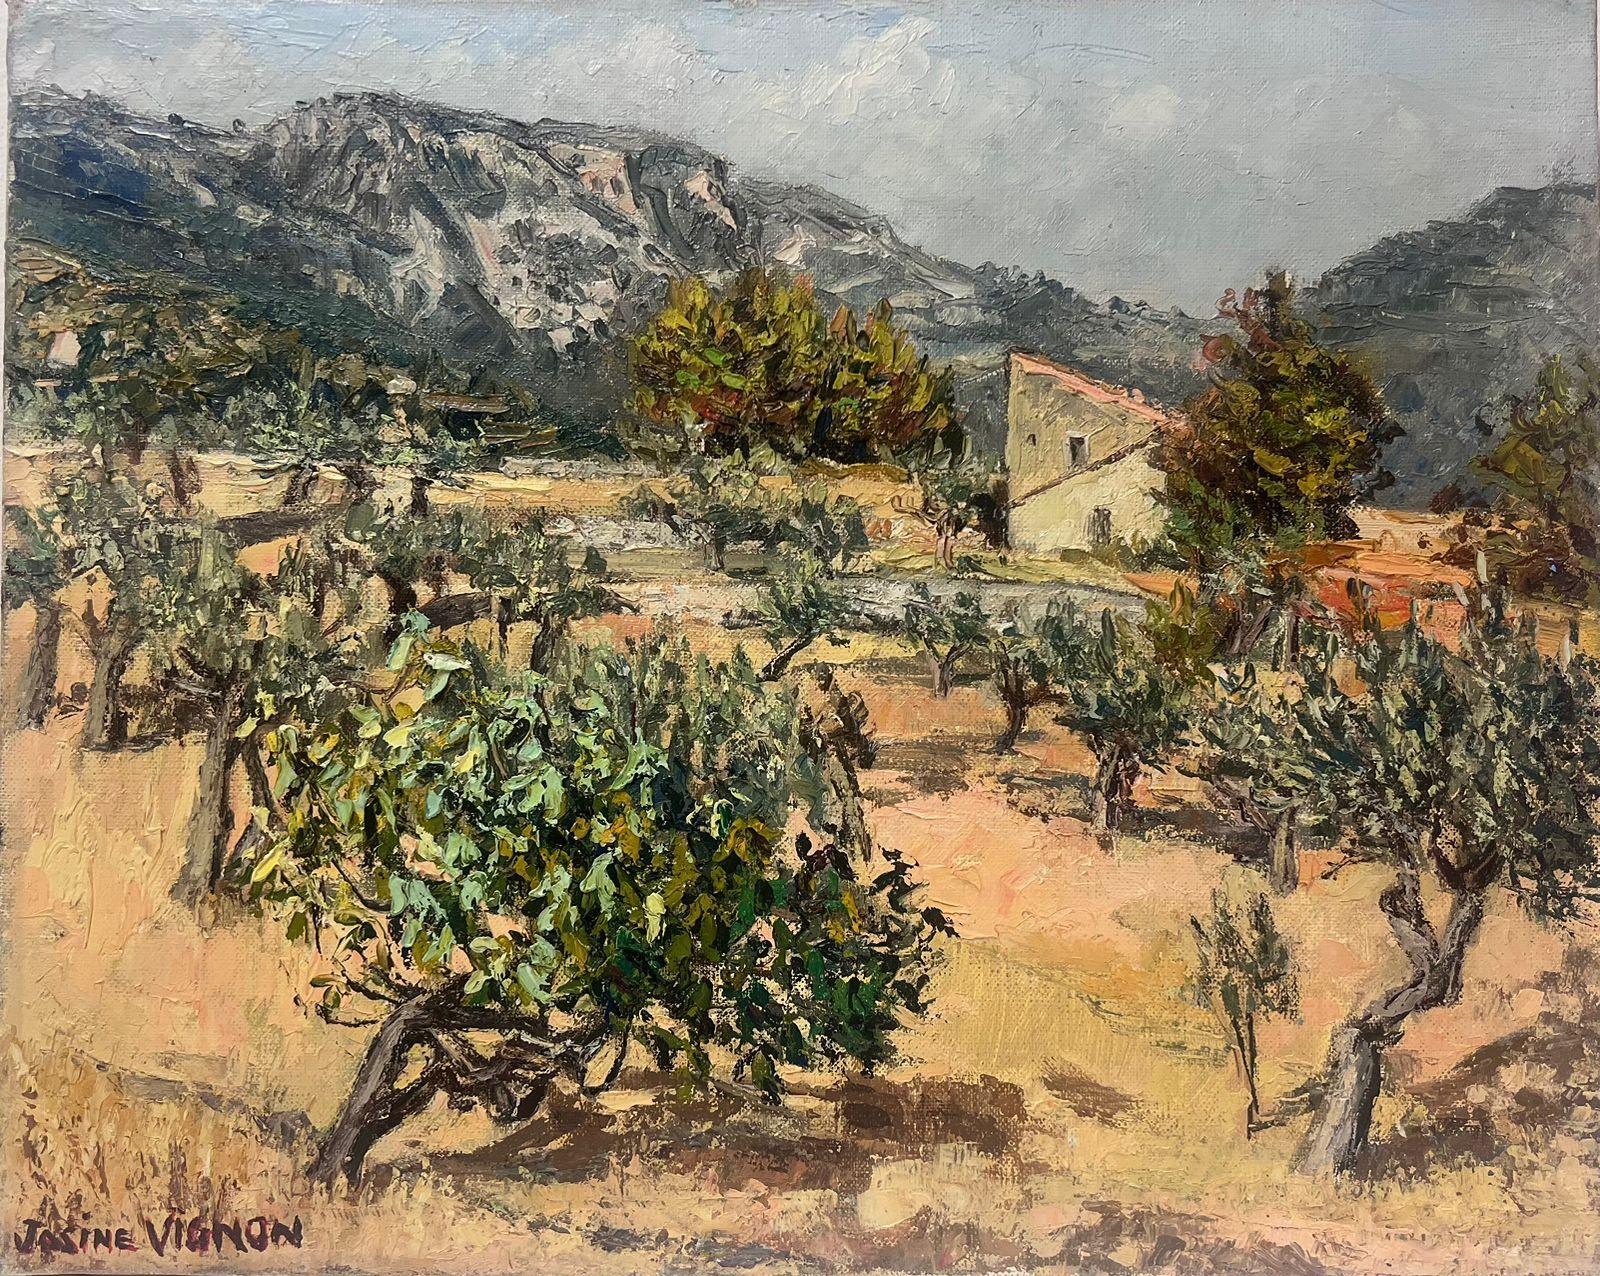 Josine Vignon Landscape Painting - 1960s French Post-Impressionist Signed Oil Olive Groves In Dry Heat Landscape